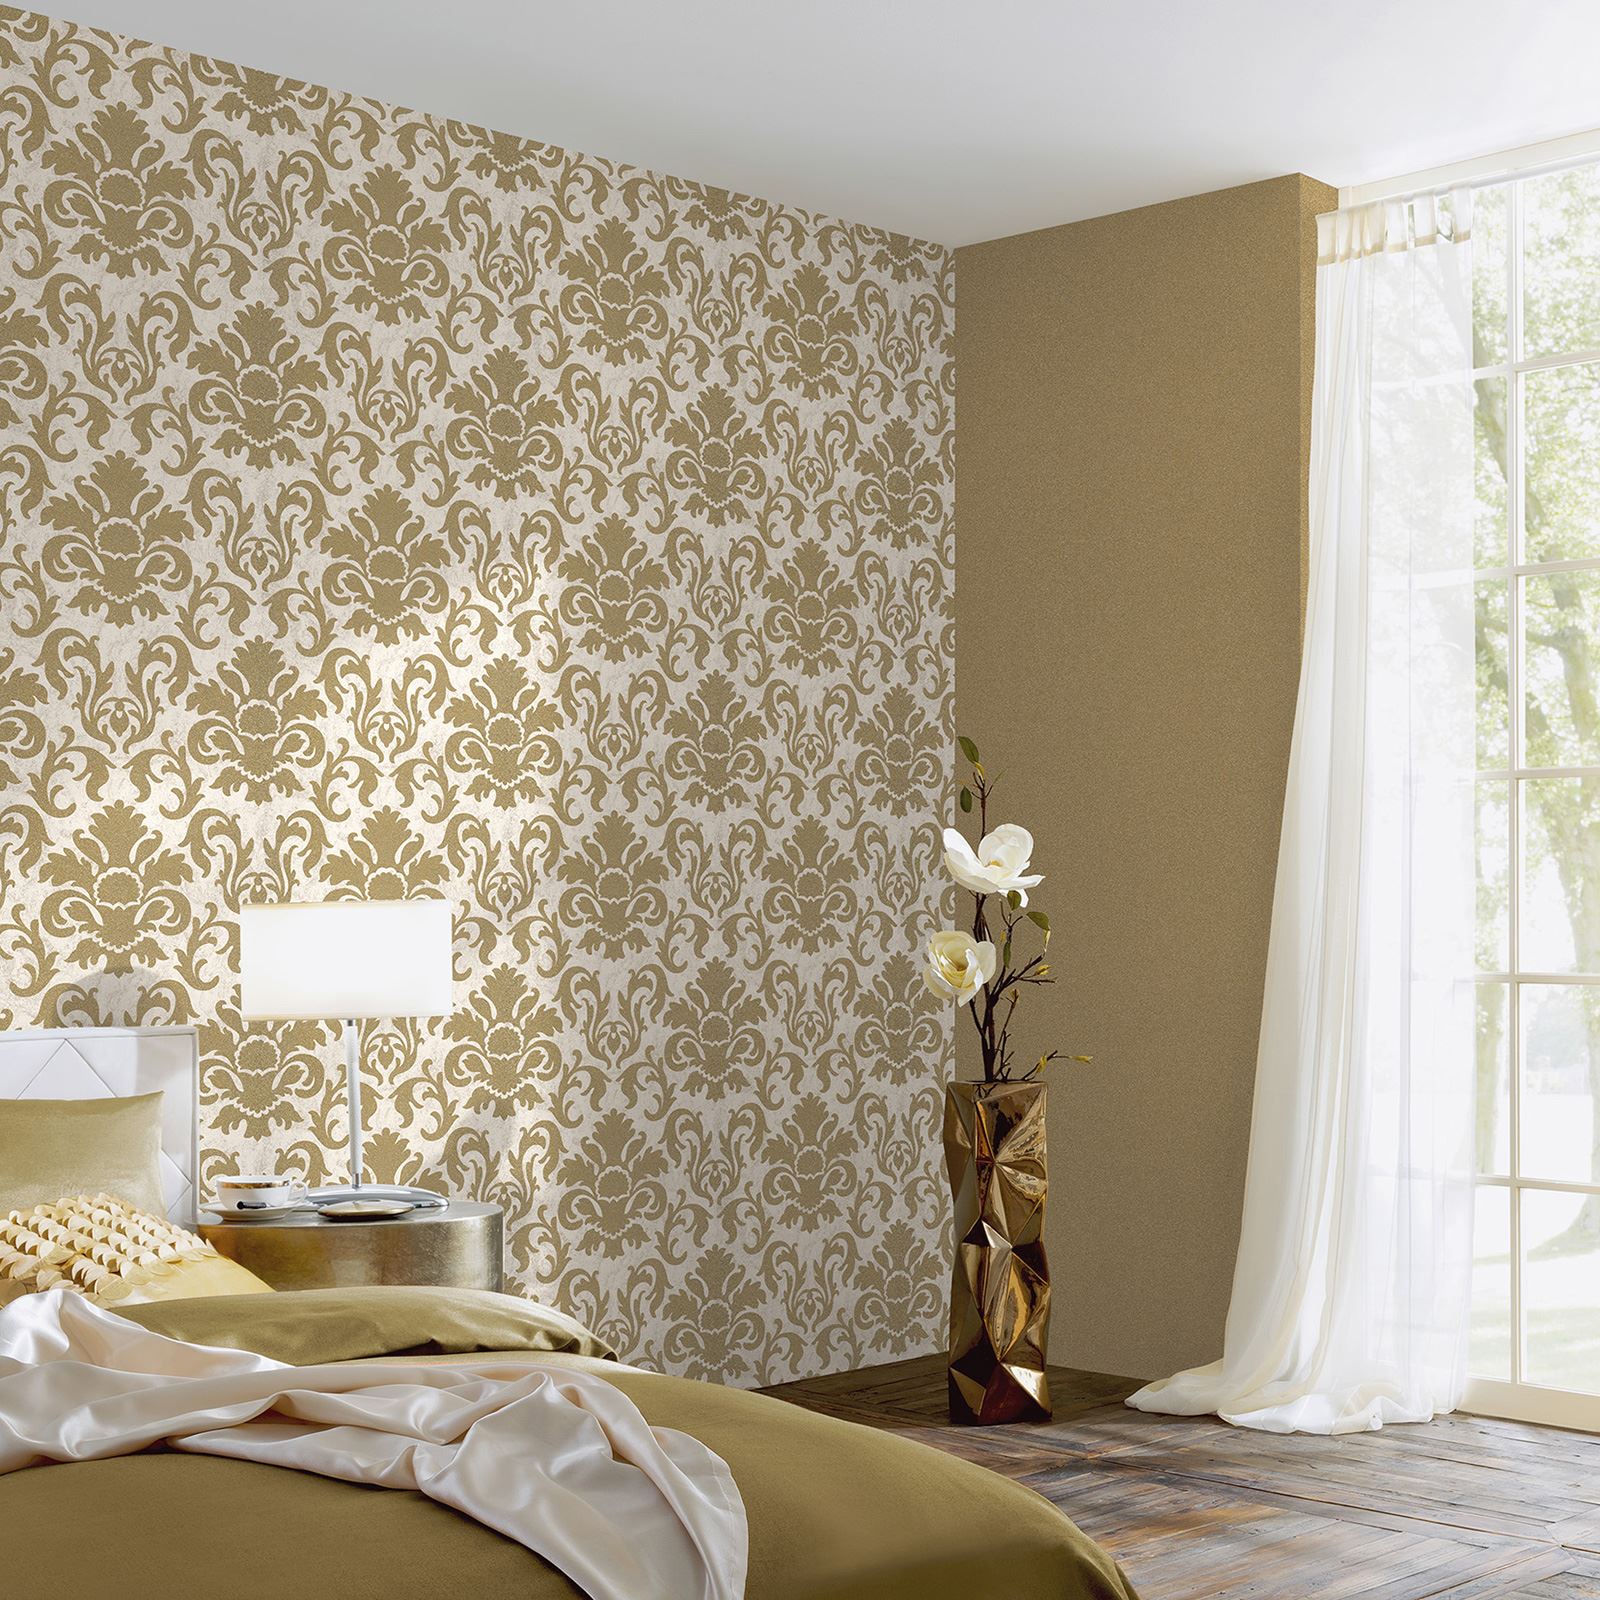 gold and silver glitter wallpaper,wall,room,wallpaper,interior design,curtain